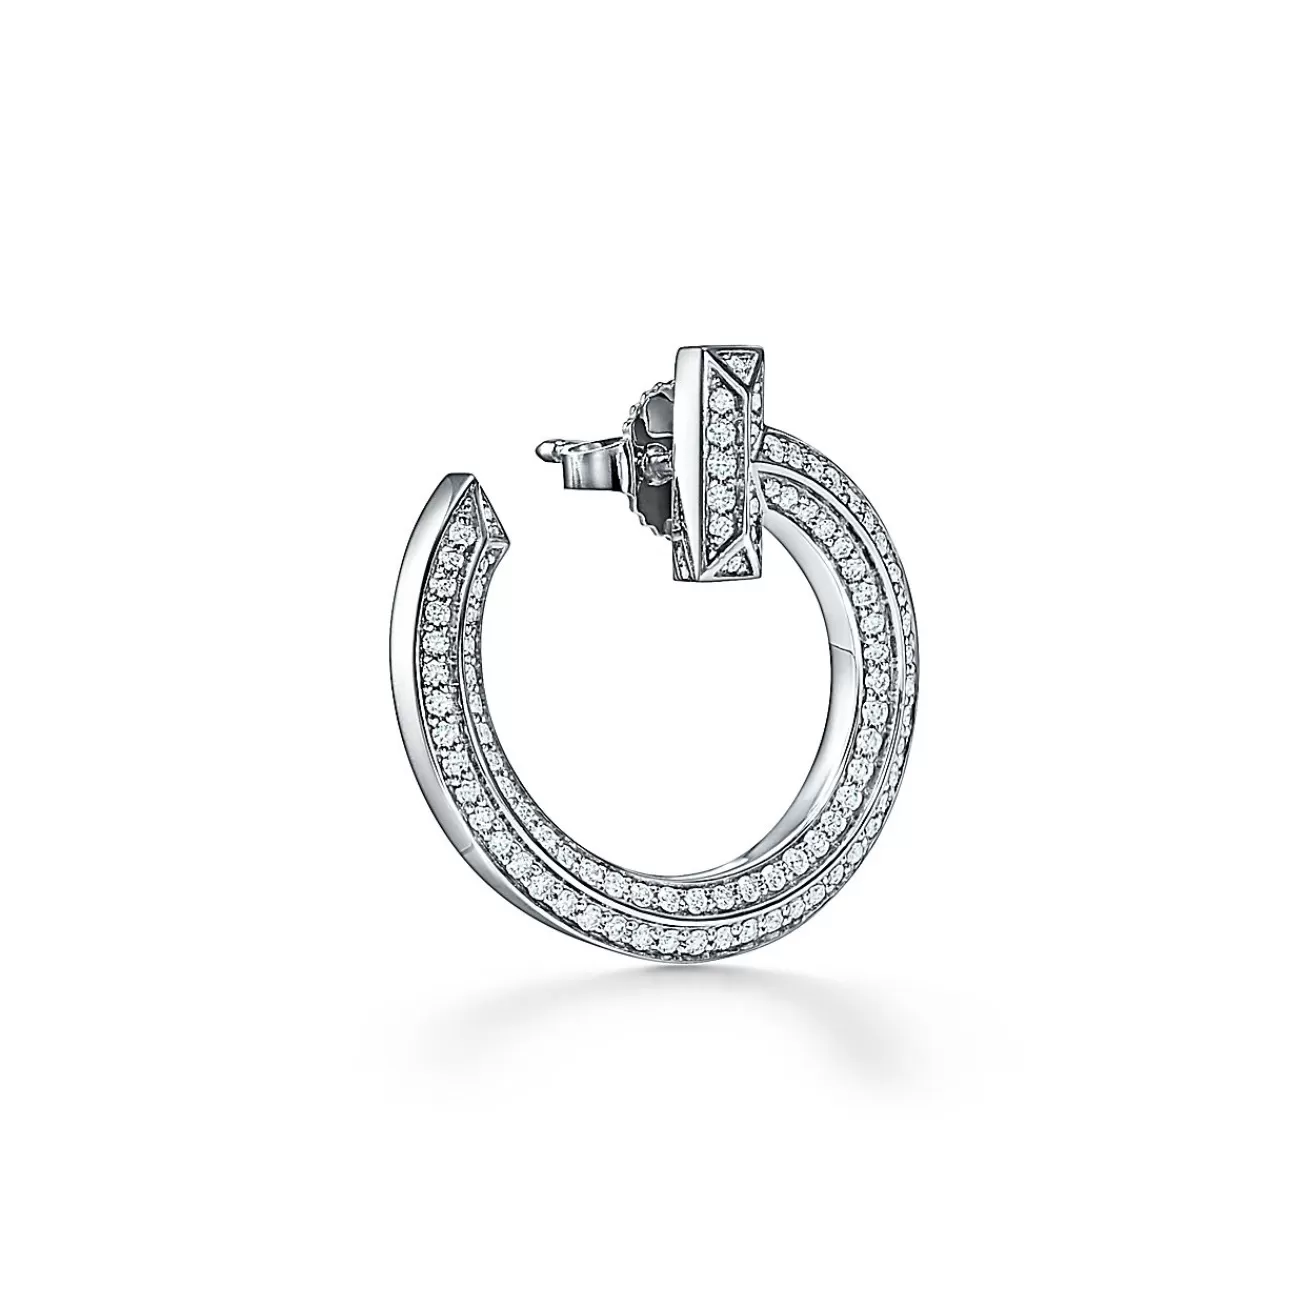 Tiffany & Co. Tiffany T T1 Open Hoop Earrings in White Gold with Diamonds | ^ Earrings | Gifts for Her